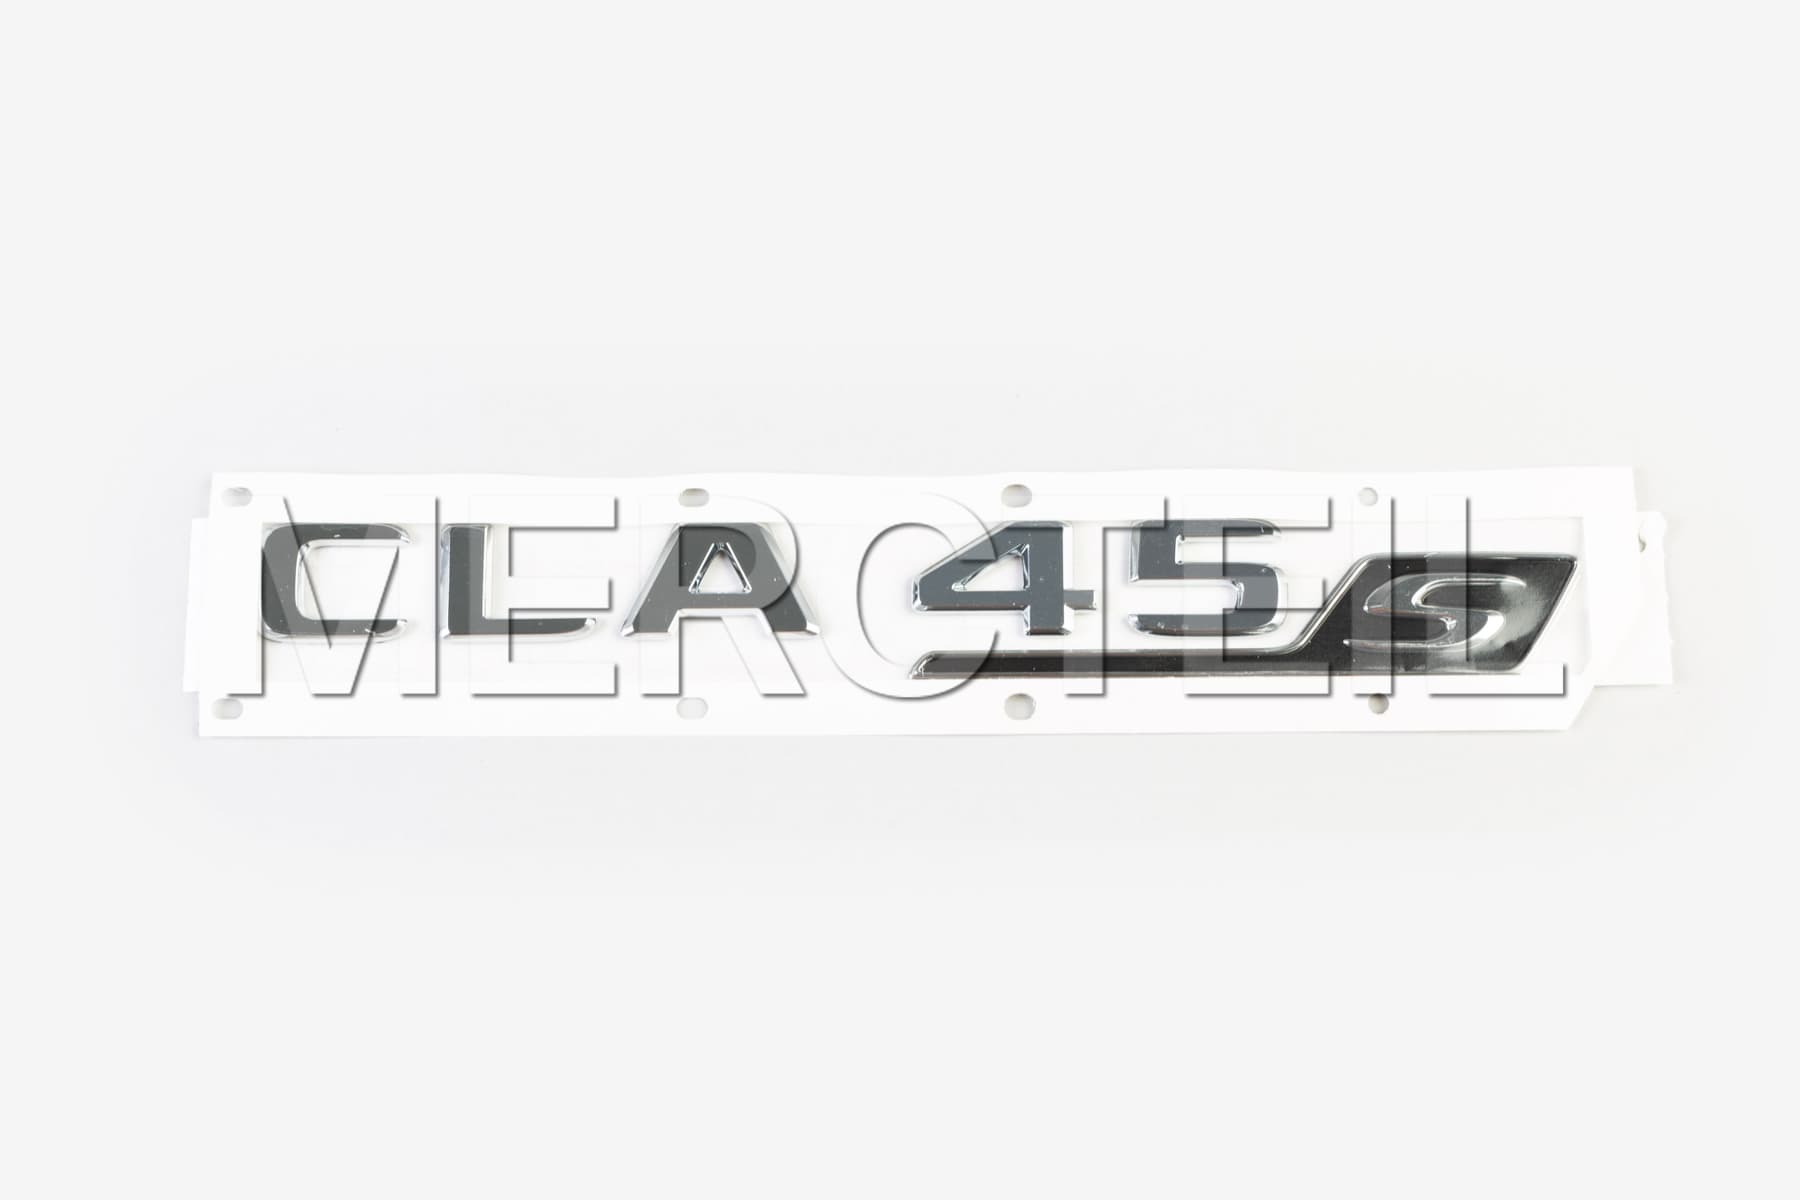 CLA45 Model Logo C118 X118 Original Mercedes AMG (Teilenummer: A1188172100)